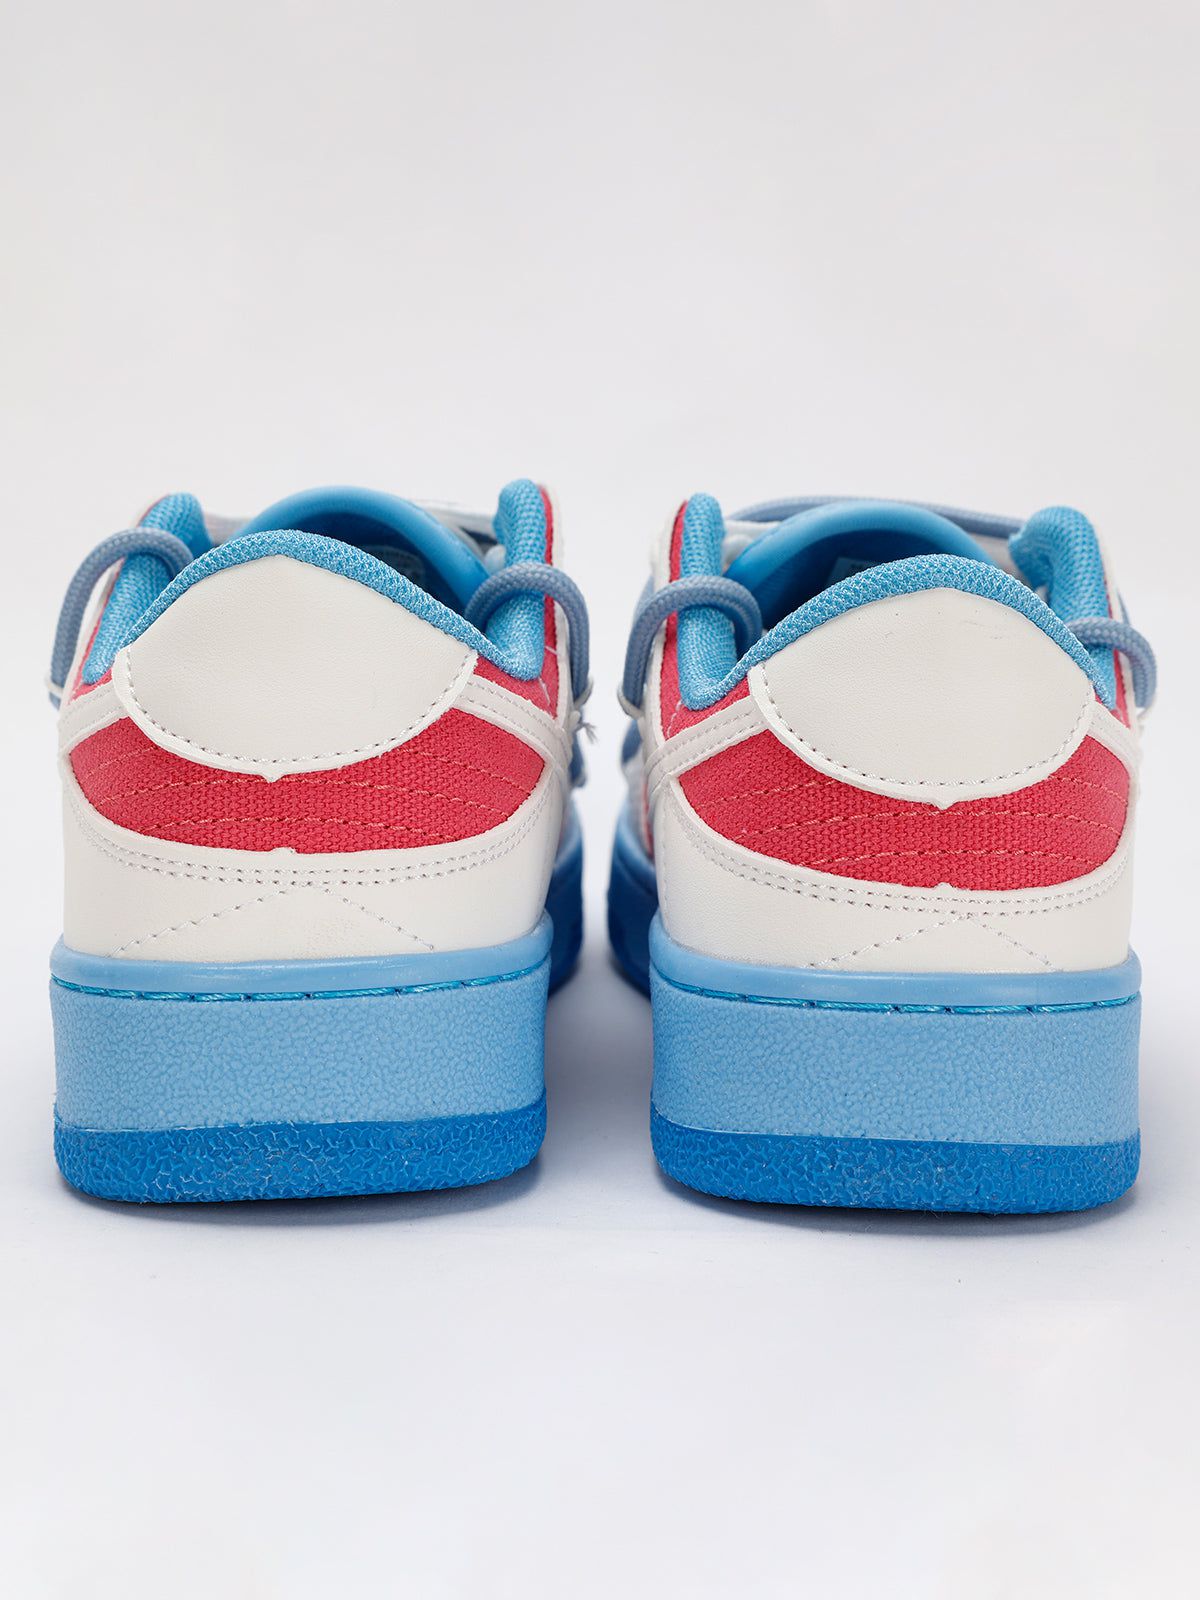 Street Shoes Blue Pink Shoes Men's Sneakers Heart Patch Walking Shoes Anti-slip Comfortable Vintage Running Shoes Men - Santo 